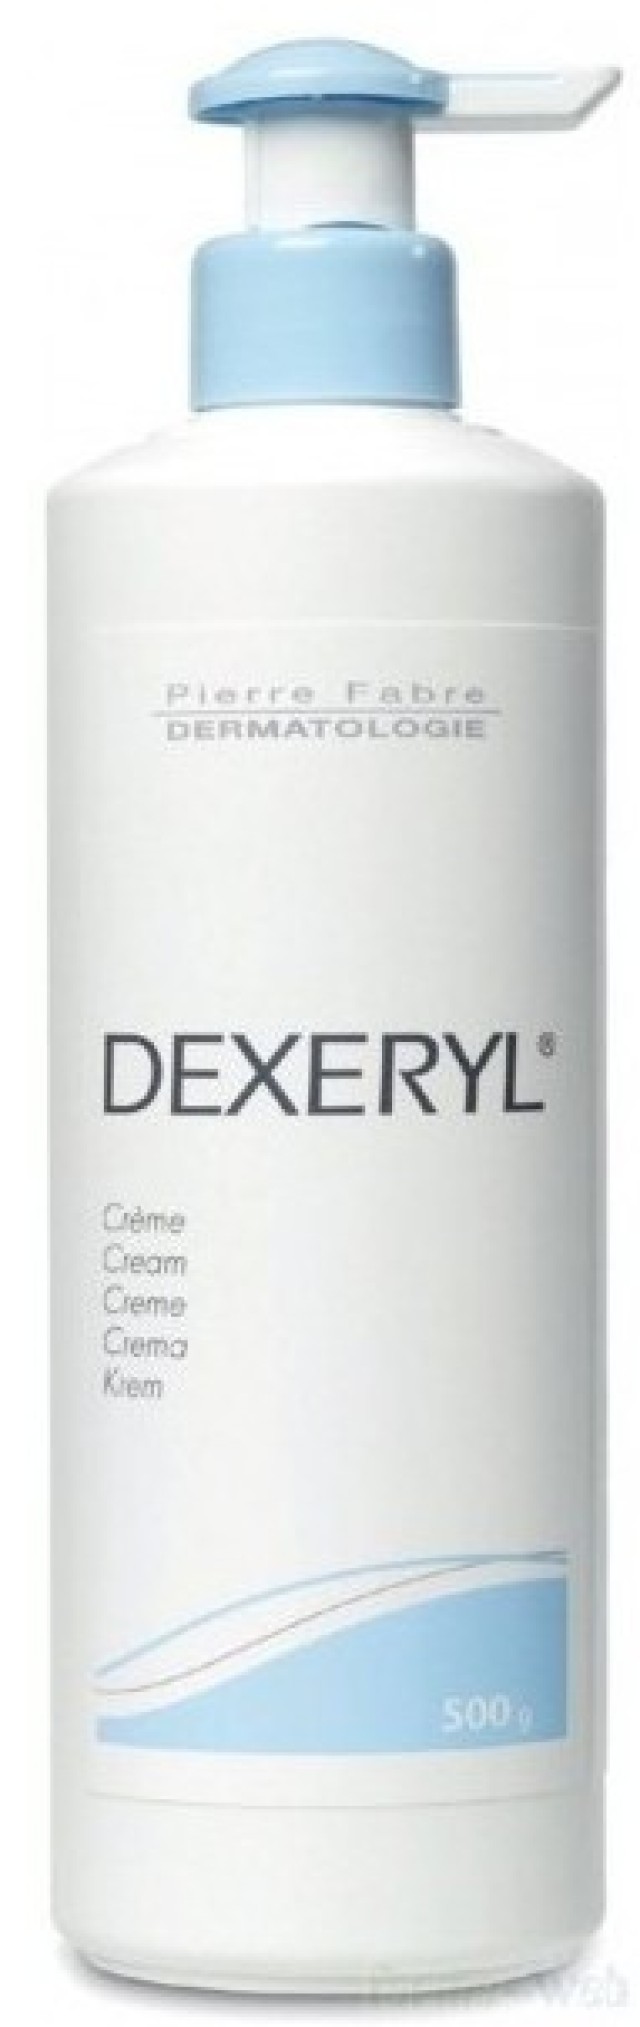 Dexeryl Emollient Cream Μαλακτική Κρέμα για Ξηρό Δέρμα 500gr